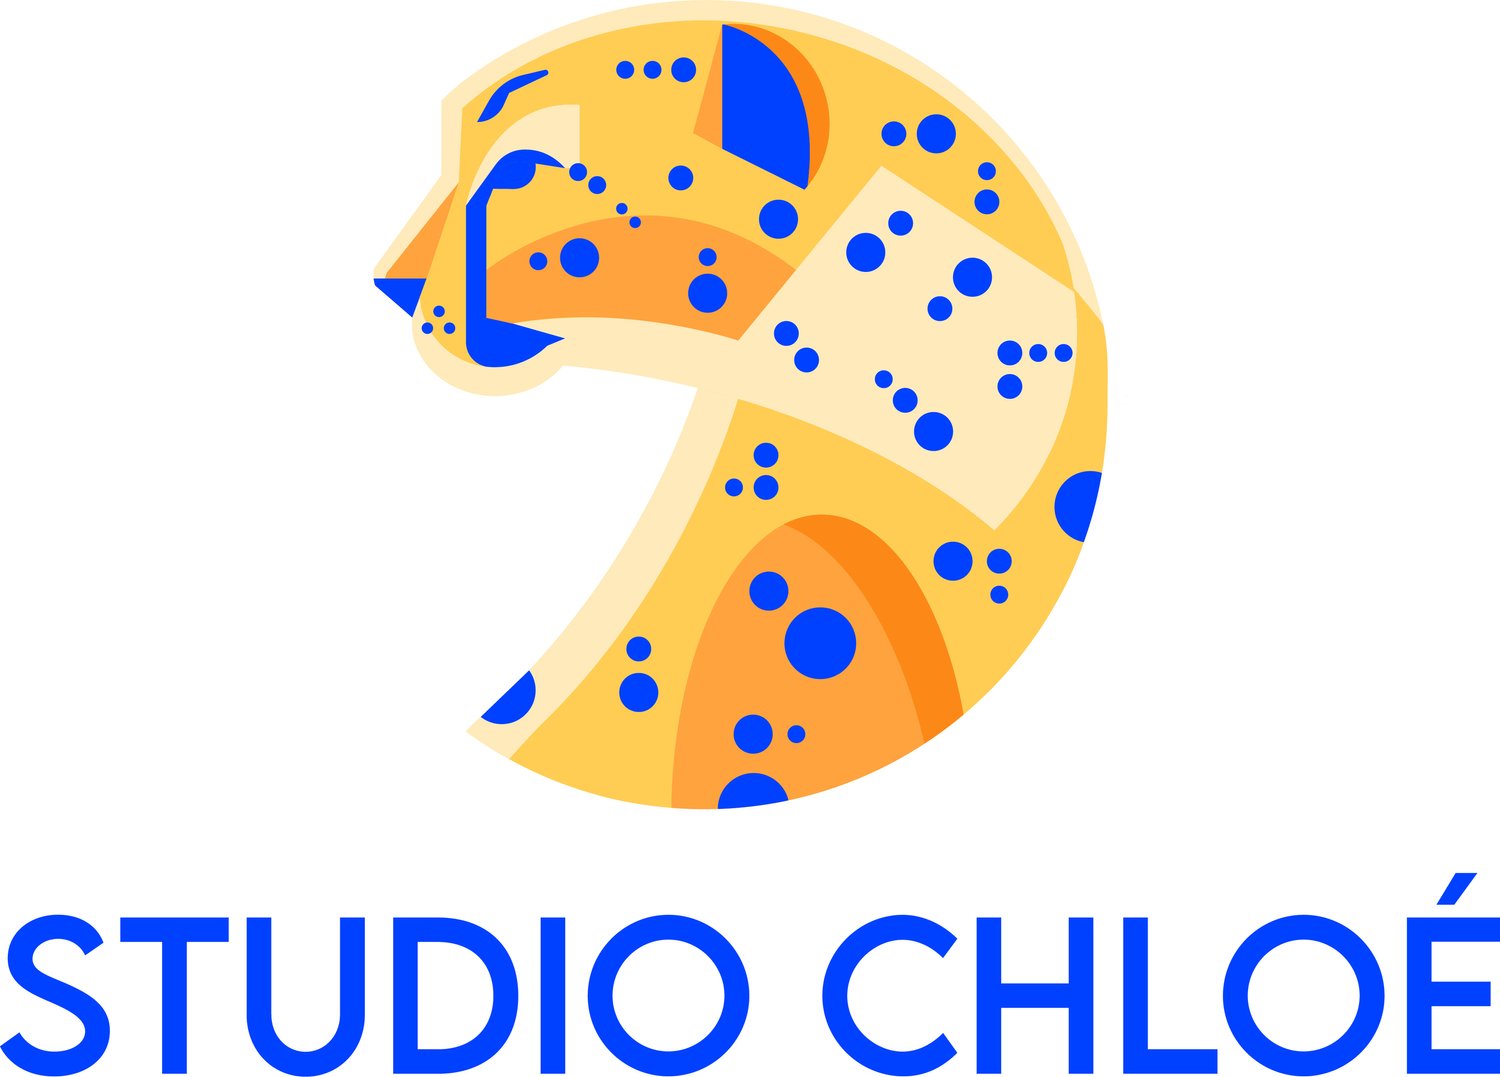 Studio Chloé